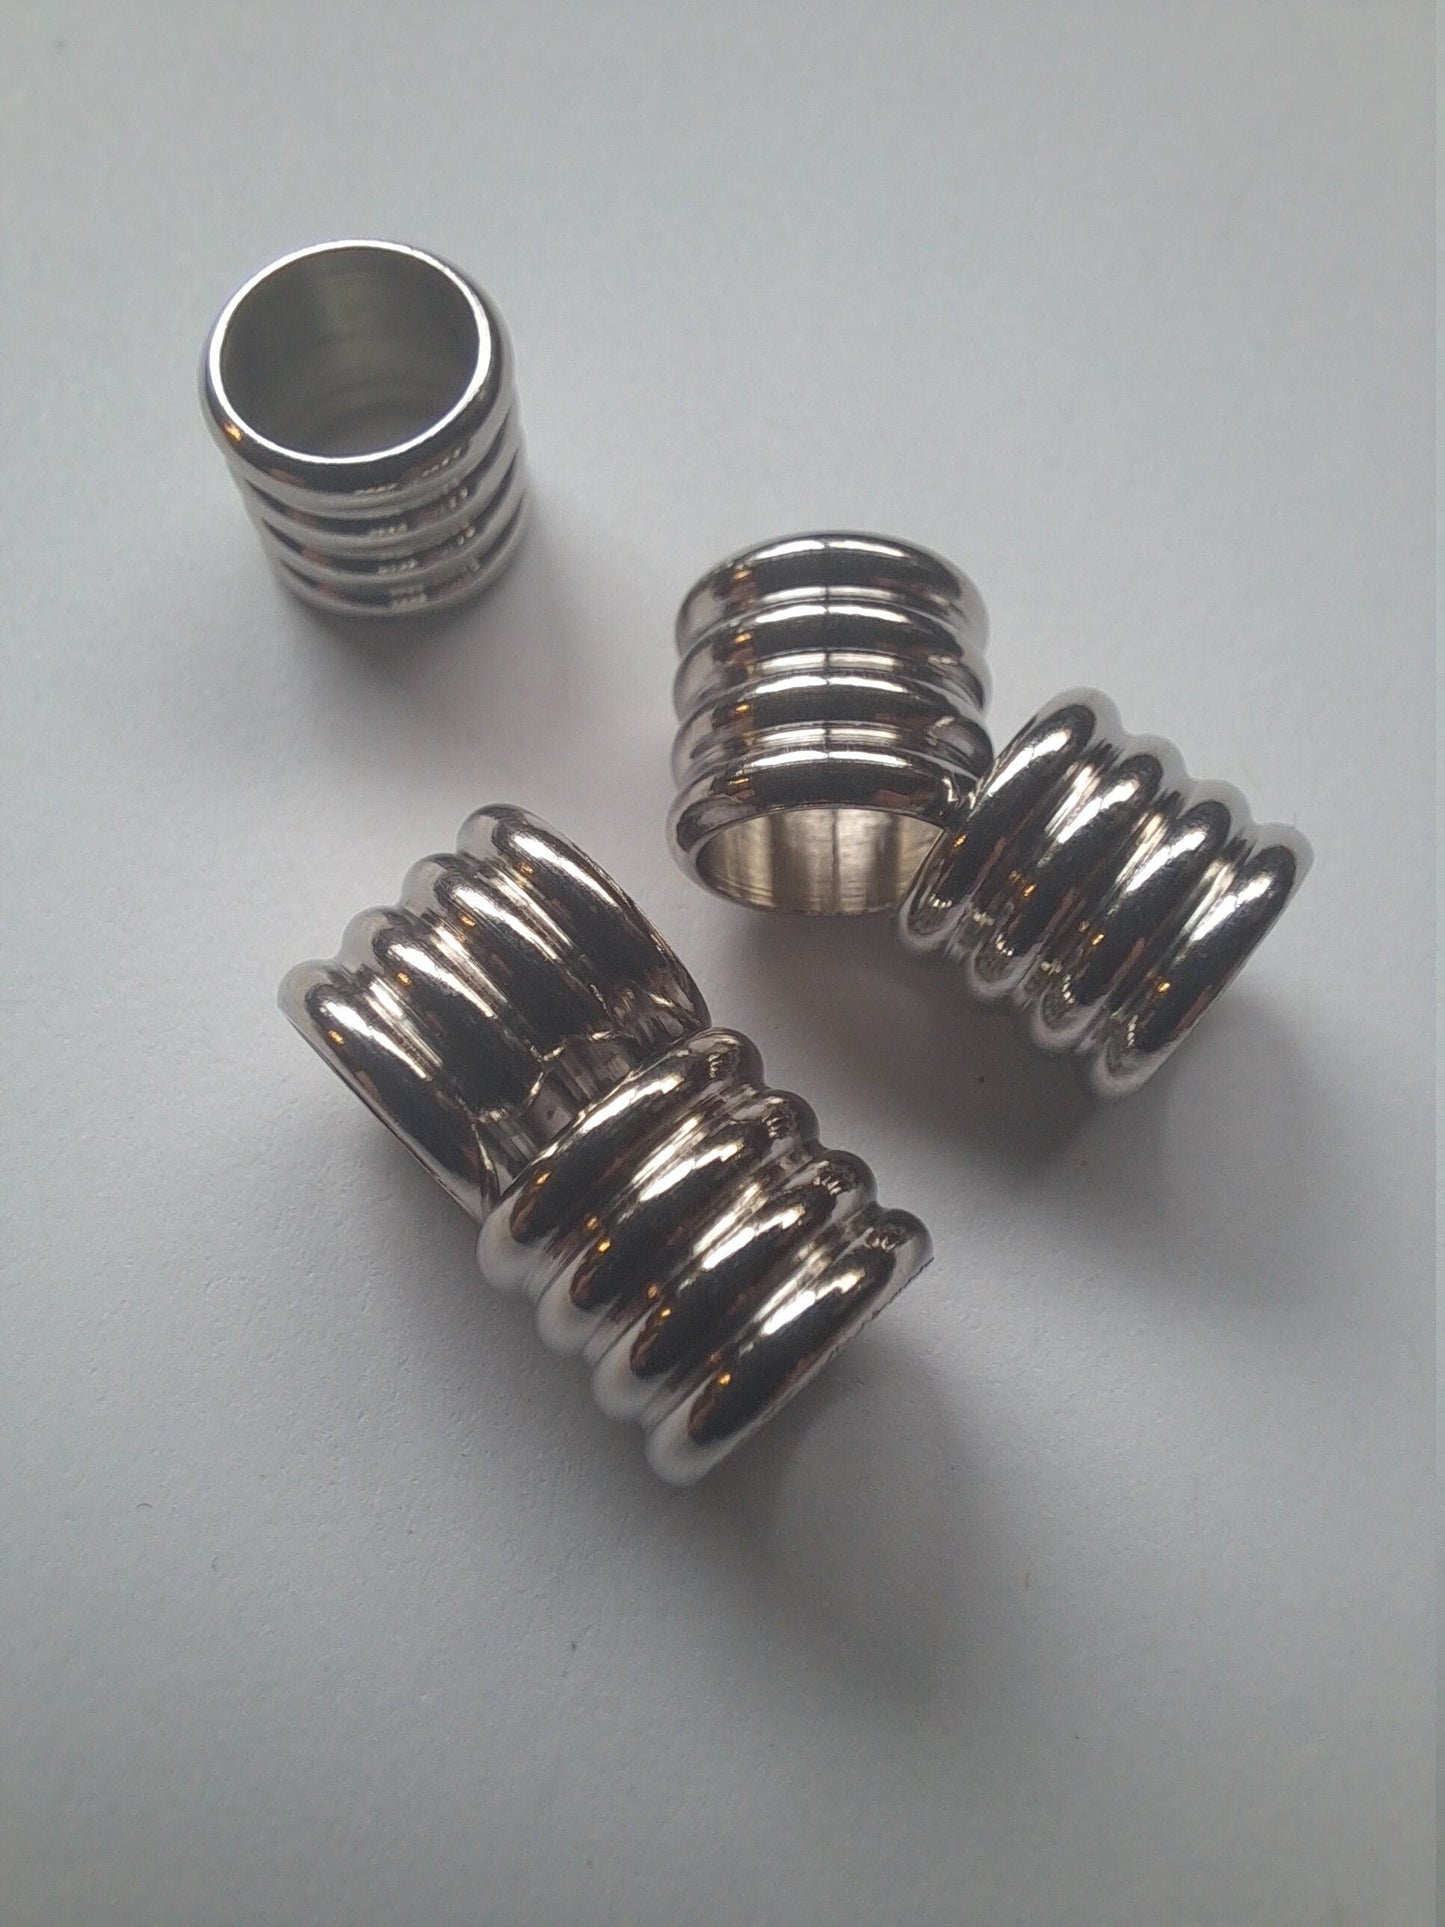 5 stainless steel tube ring loc beads/ 8mm Bead hole / Dreadlock Beads, Metal Dread Bead, Dreadlock Accessories, Loc Bead, Dread Jewelry